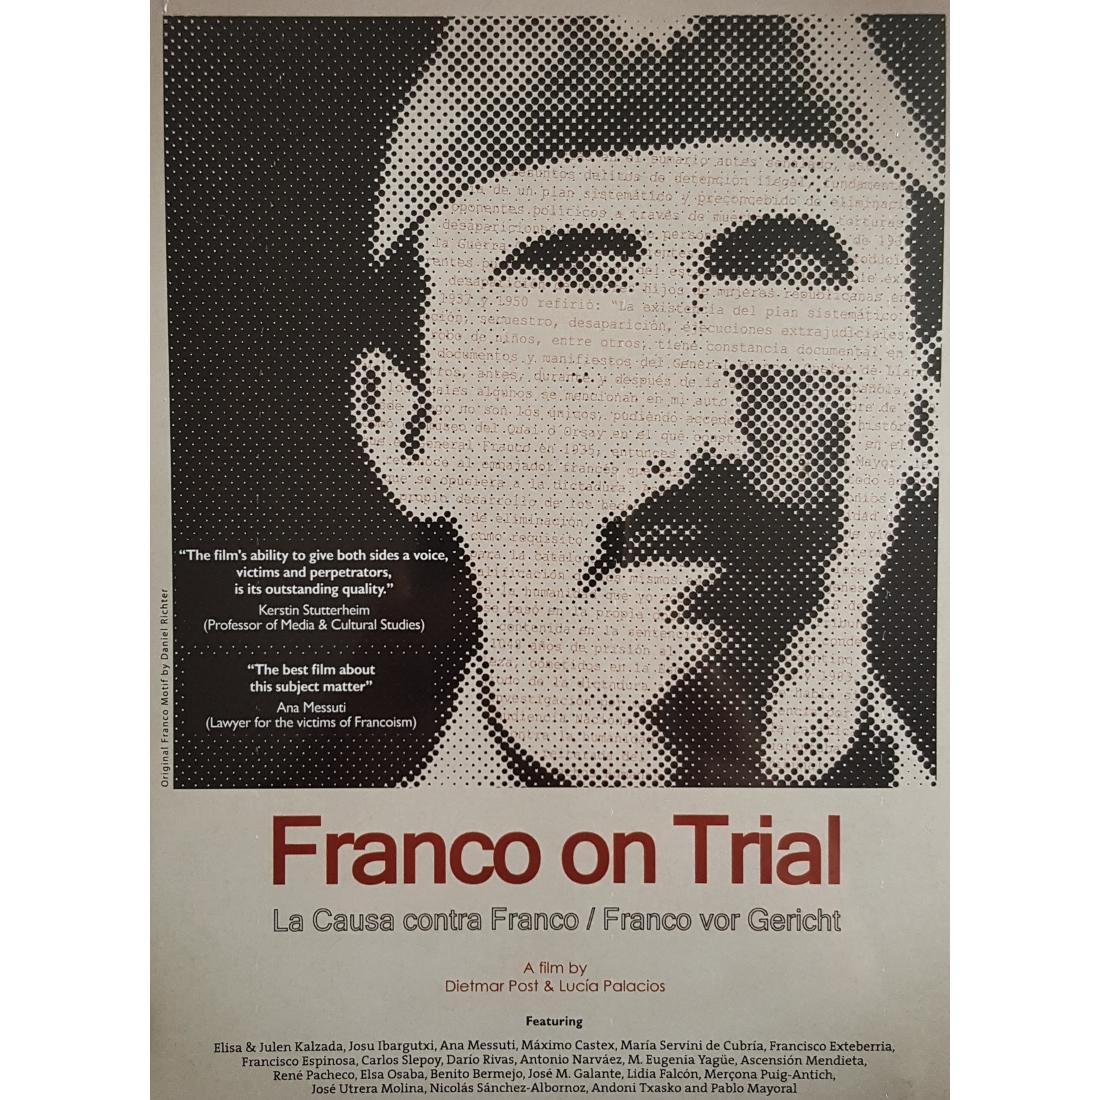 La causa contro Franco (Franco on Trial)